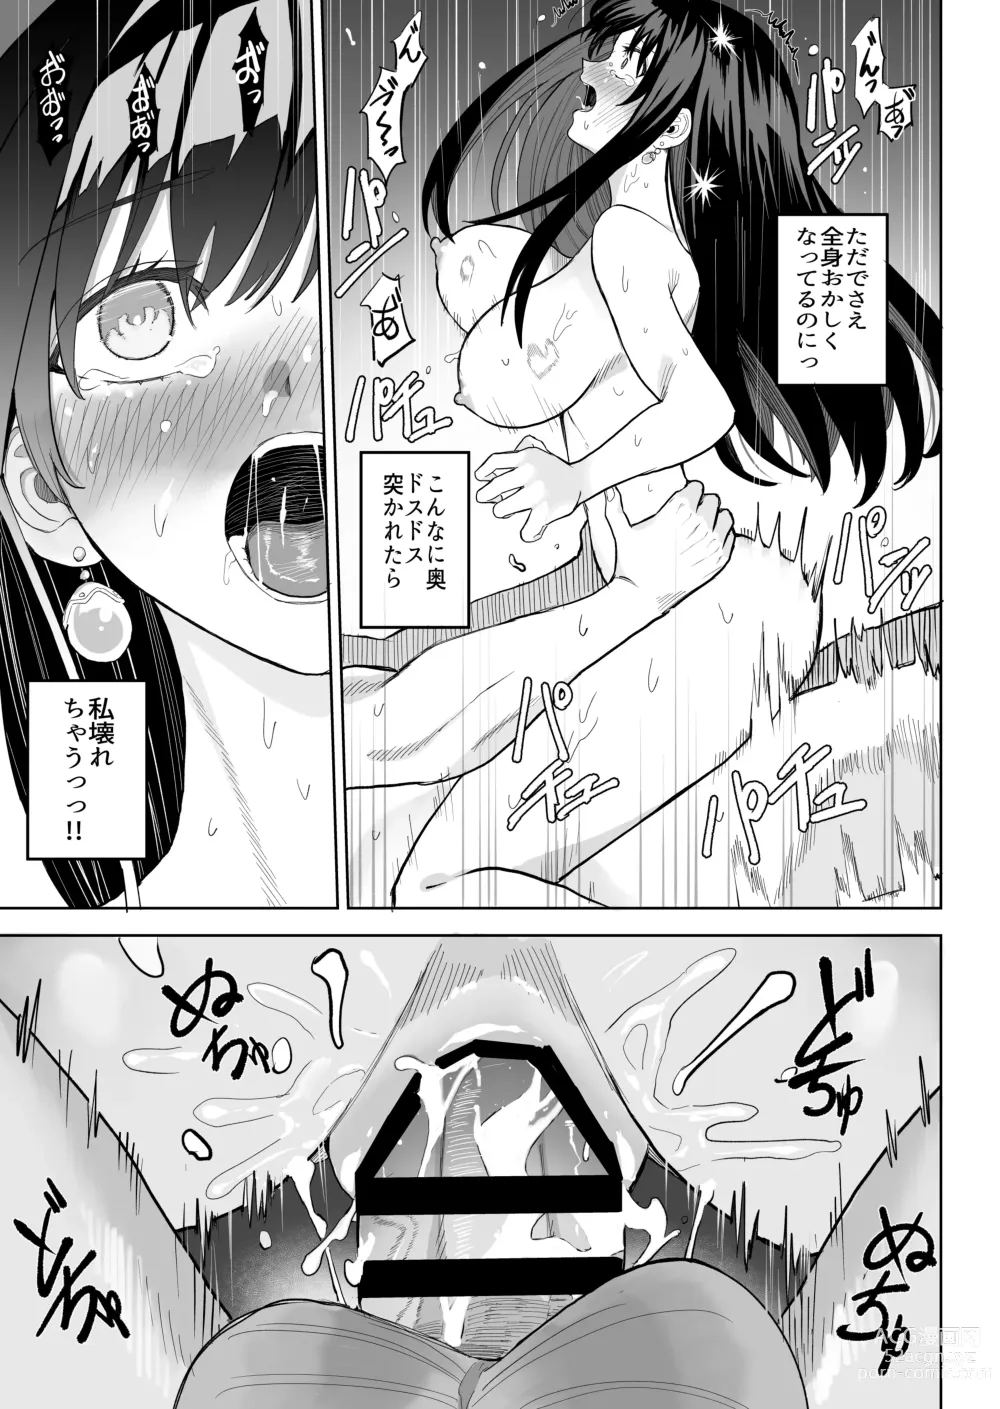 Page 28 of doujinshi Hime Sephia ga Kowareru made